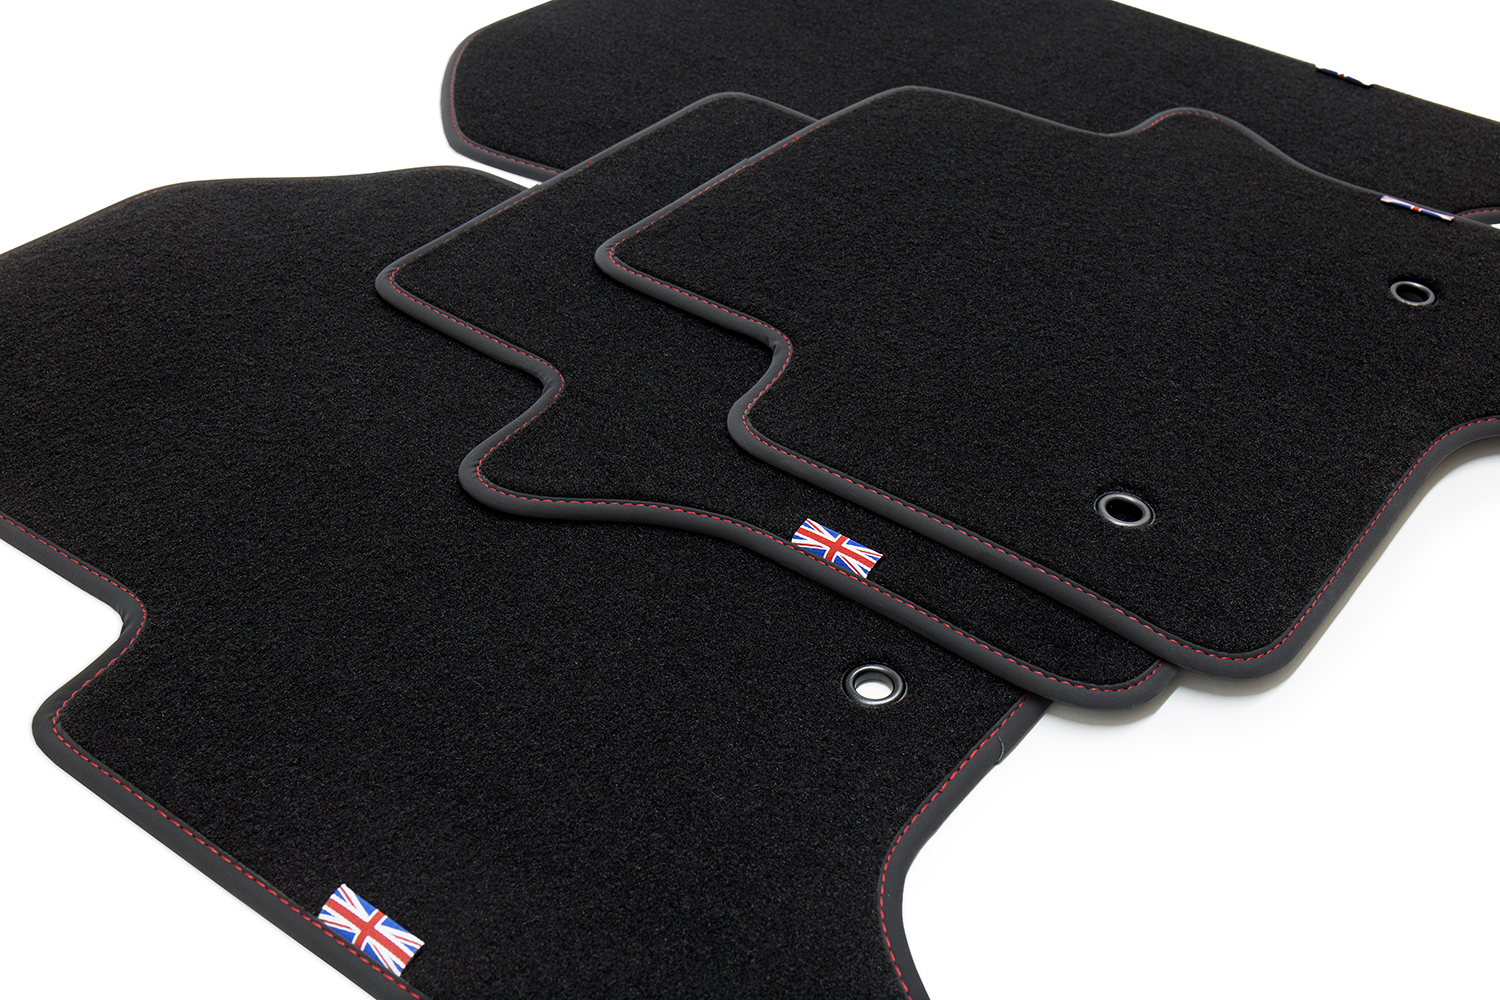 Exclusive Union Jack Floor Mats Fits For Jaguar Xj X350 From